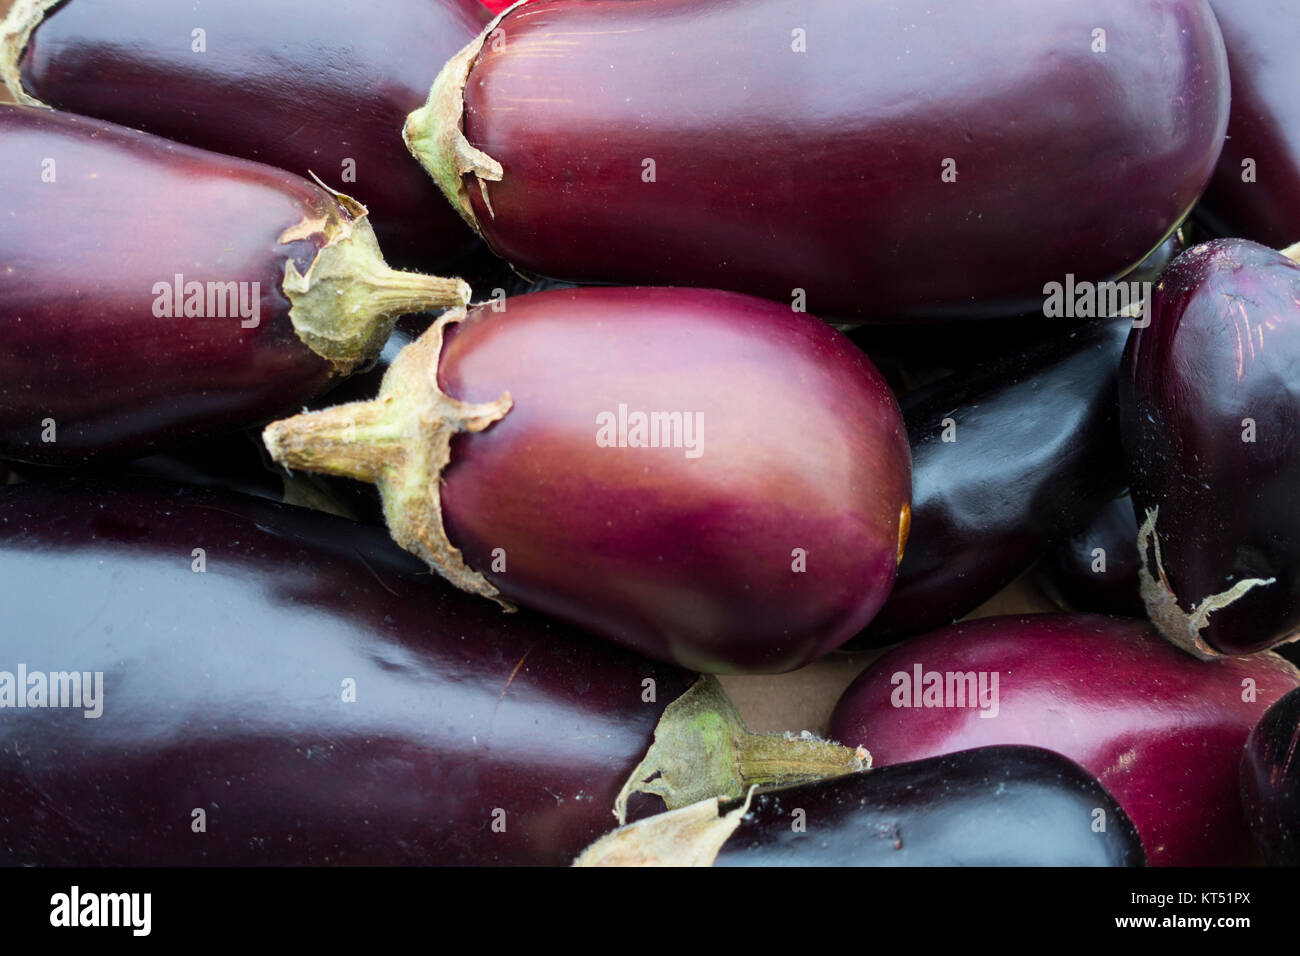 eggplant large egg-shaped fruit, eaten as a vegetable. dark purple skin,  nightshade family Stock Photo